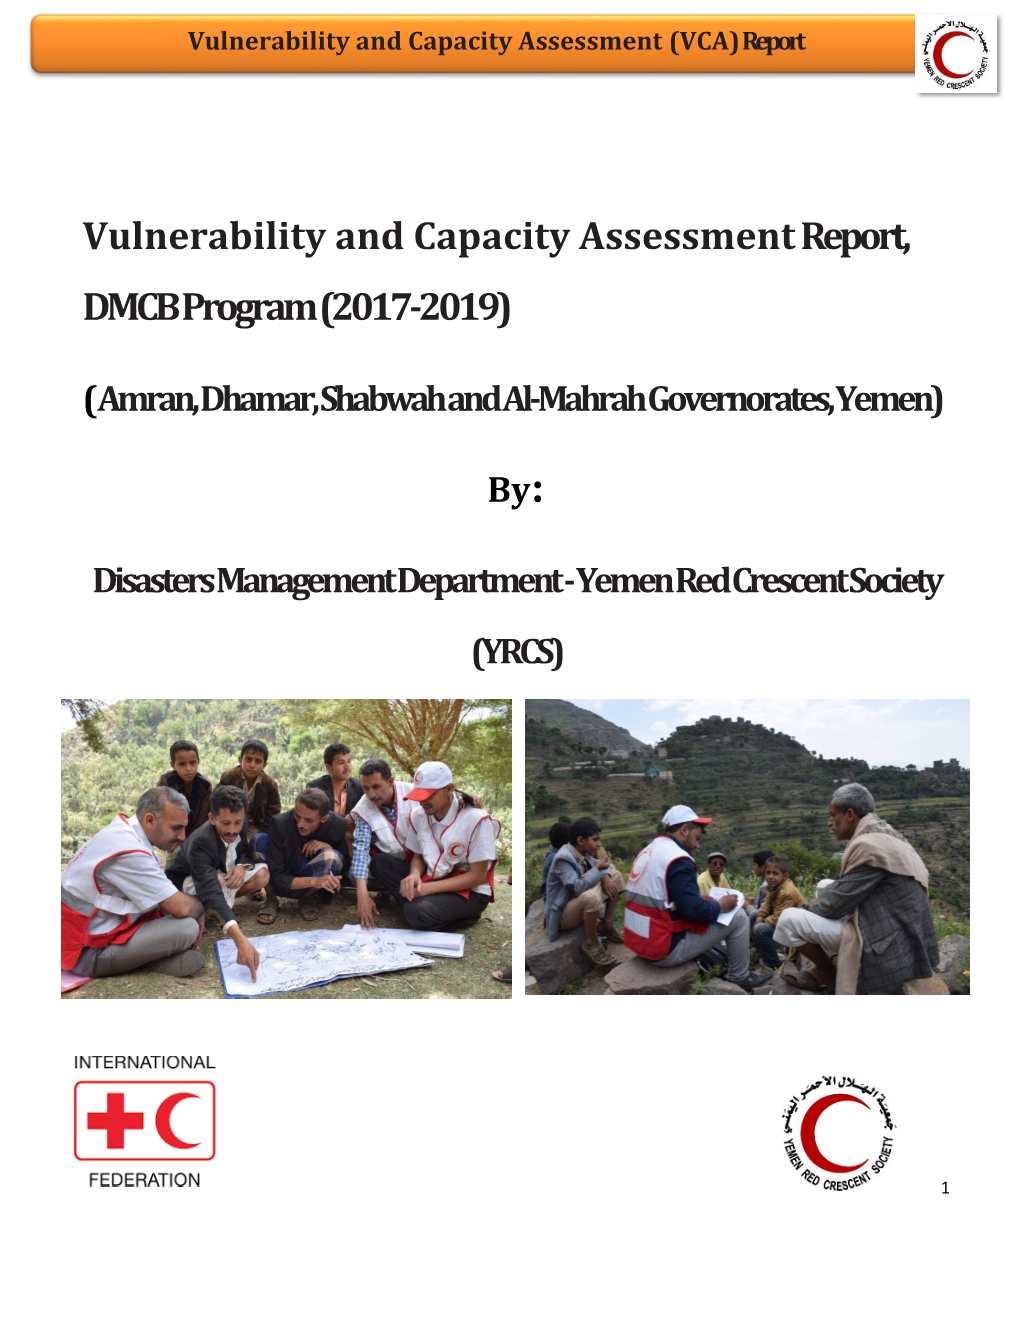 Vulnerability and Capacity Assessment Report, DMCB Program (2017-2019)